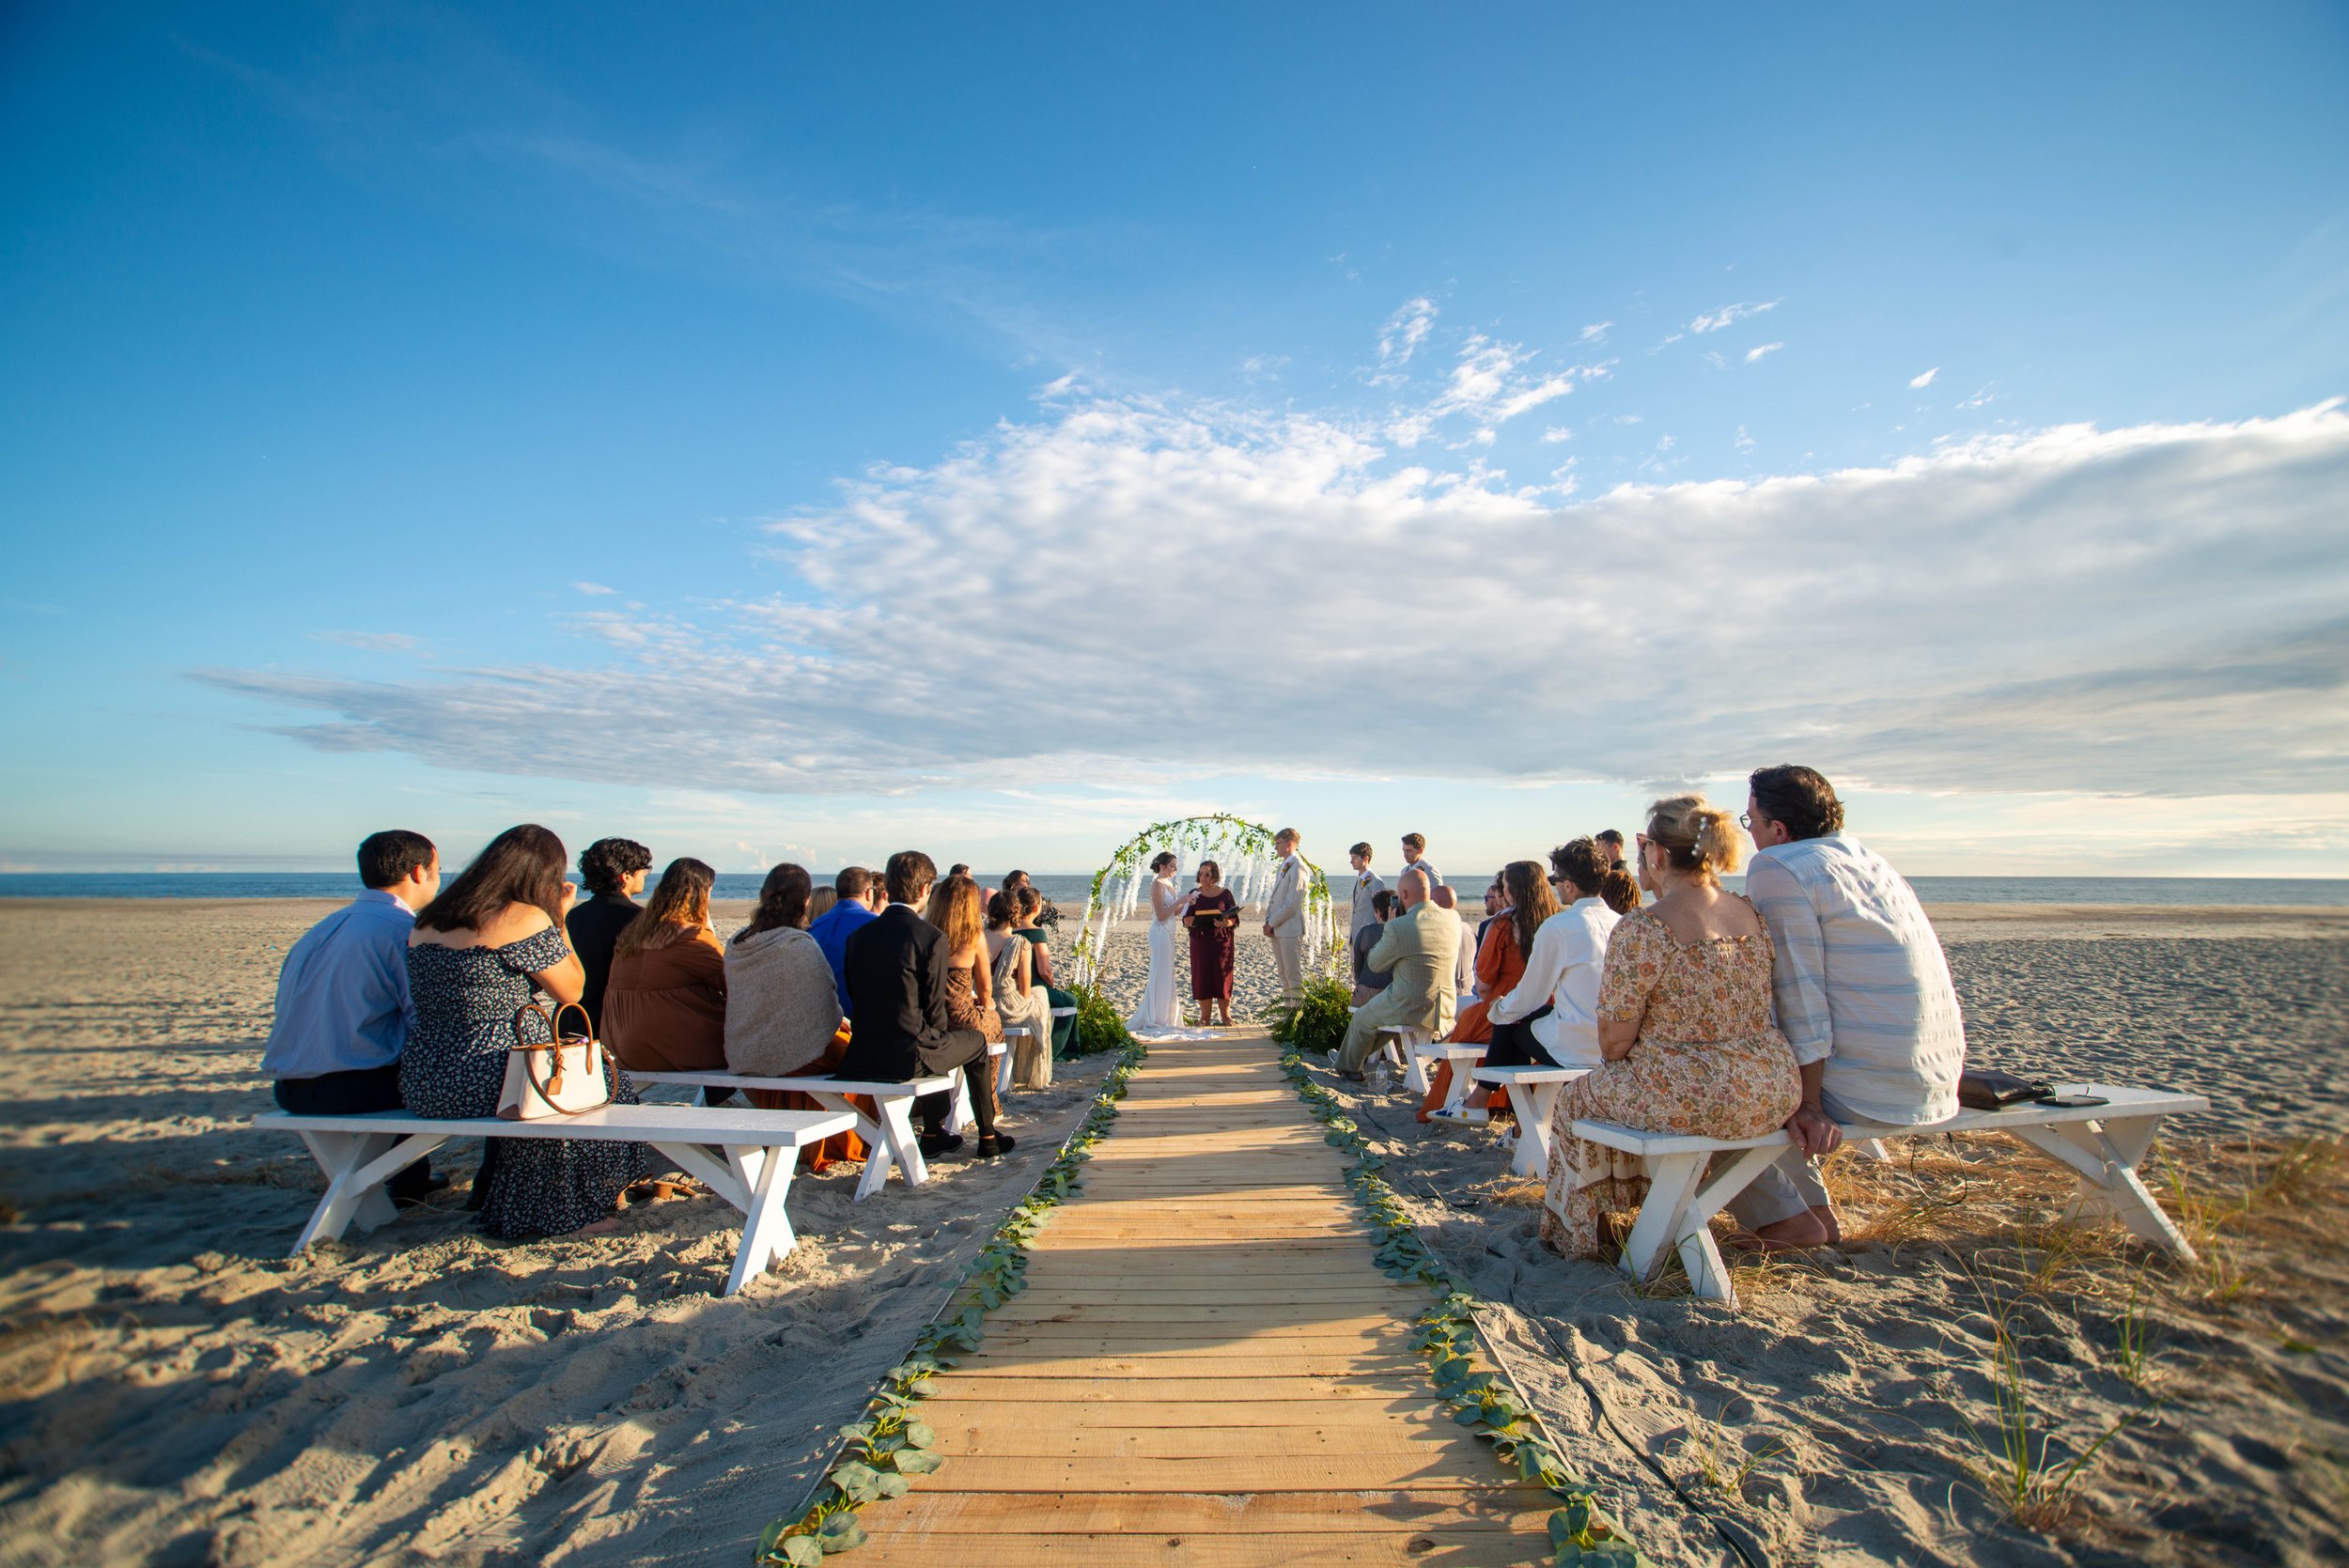 J greg photography | ocean isle beach wedding photographer.jpg